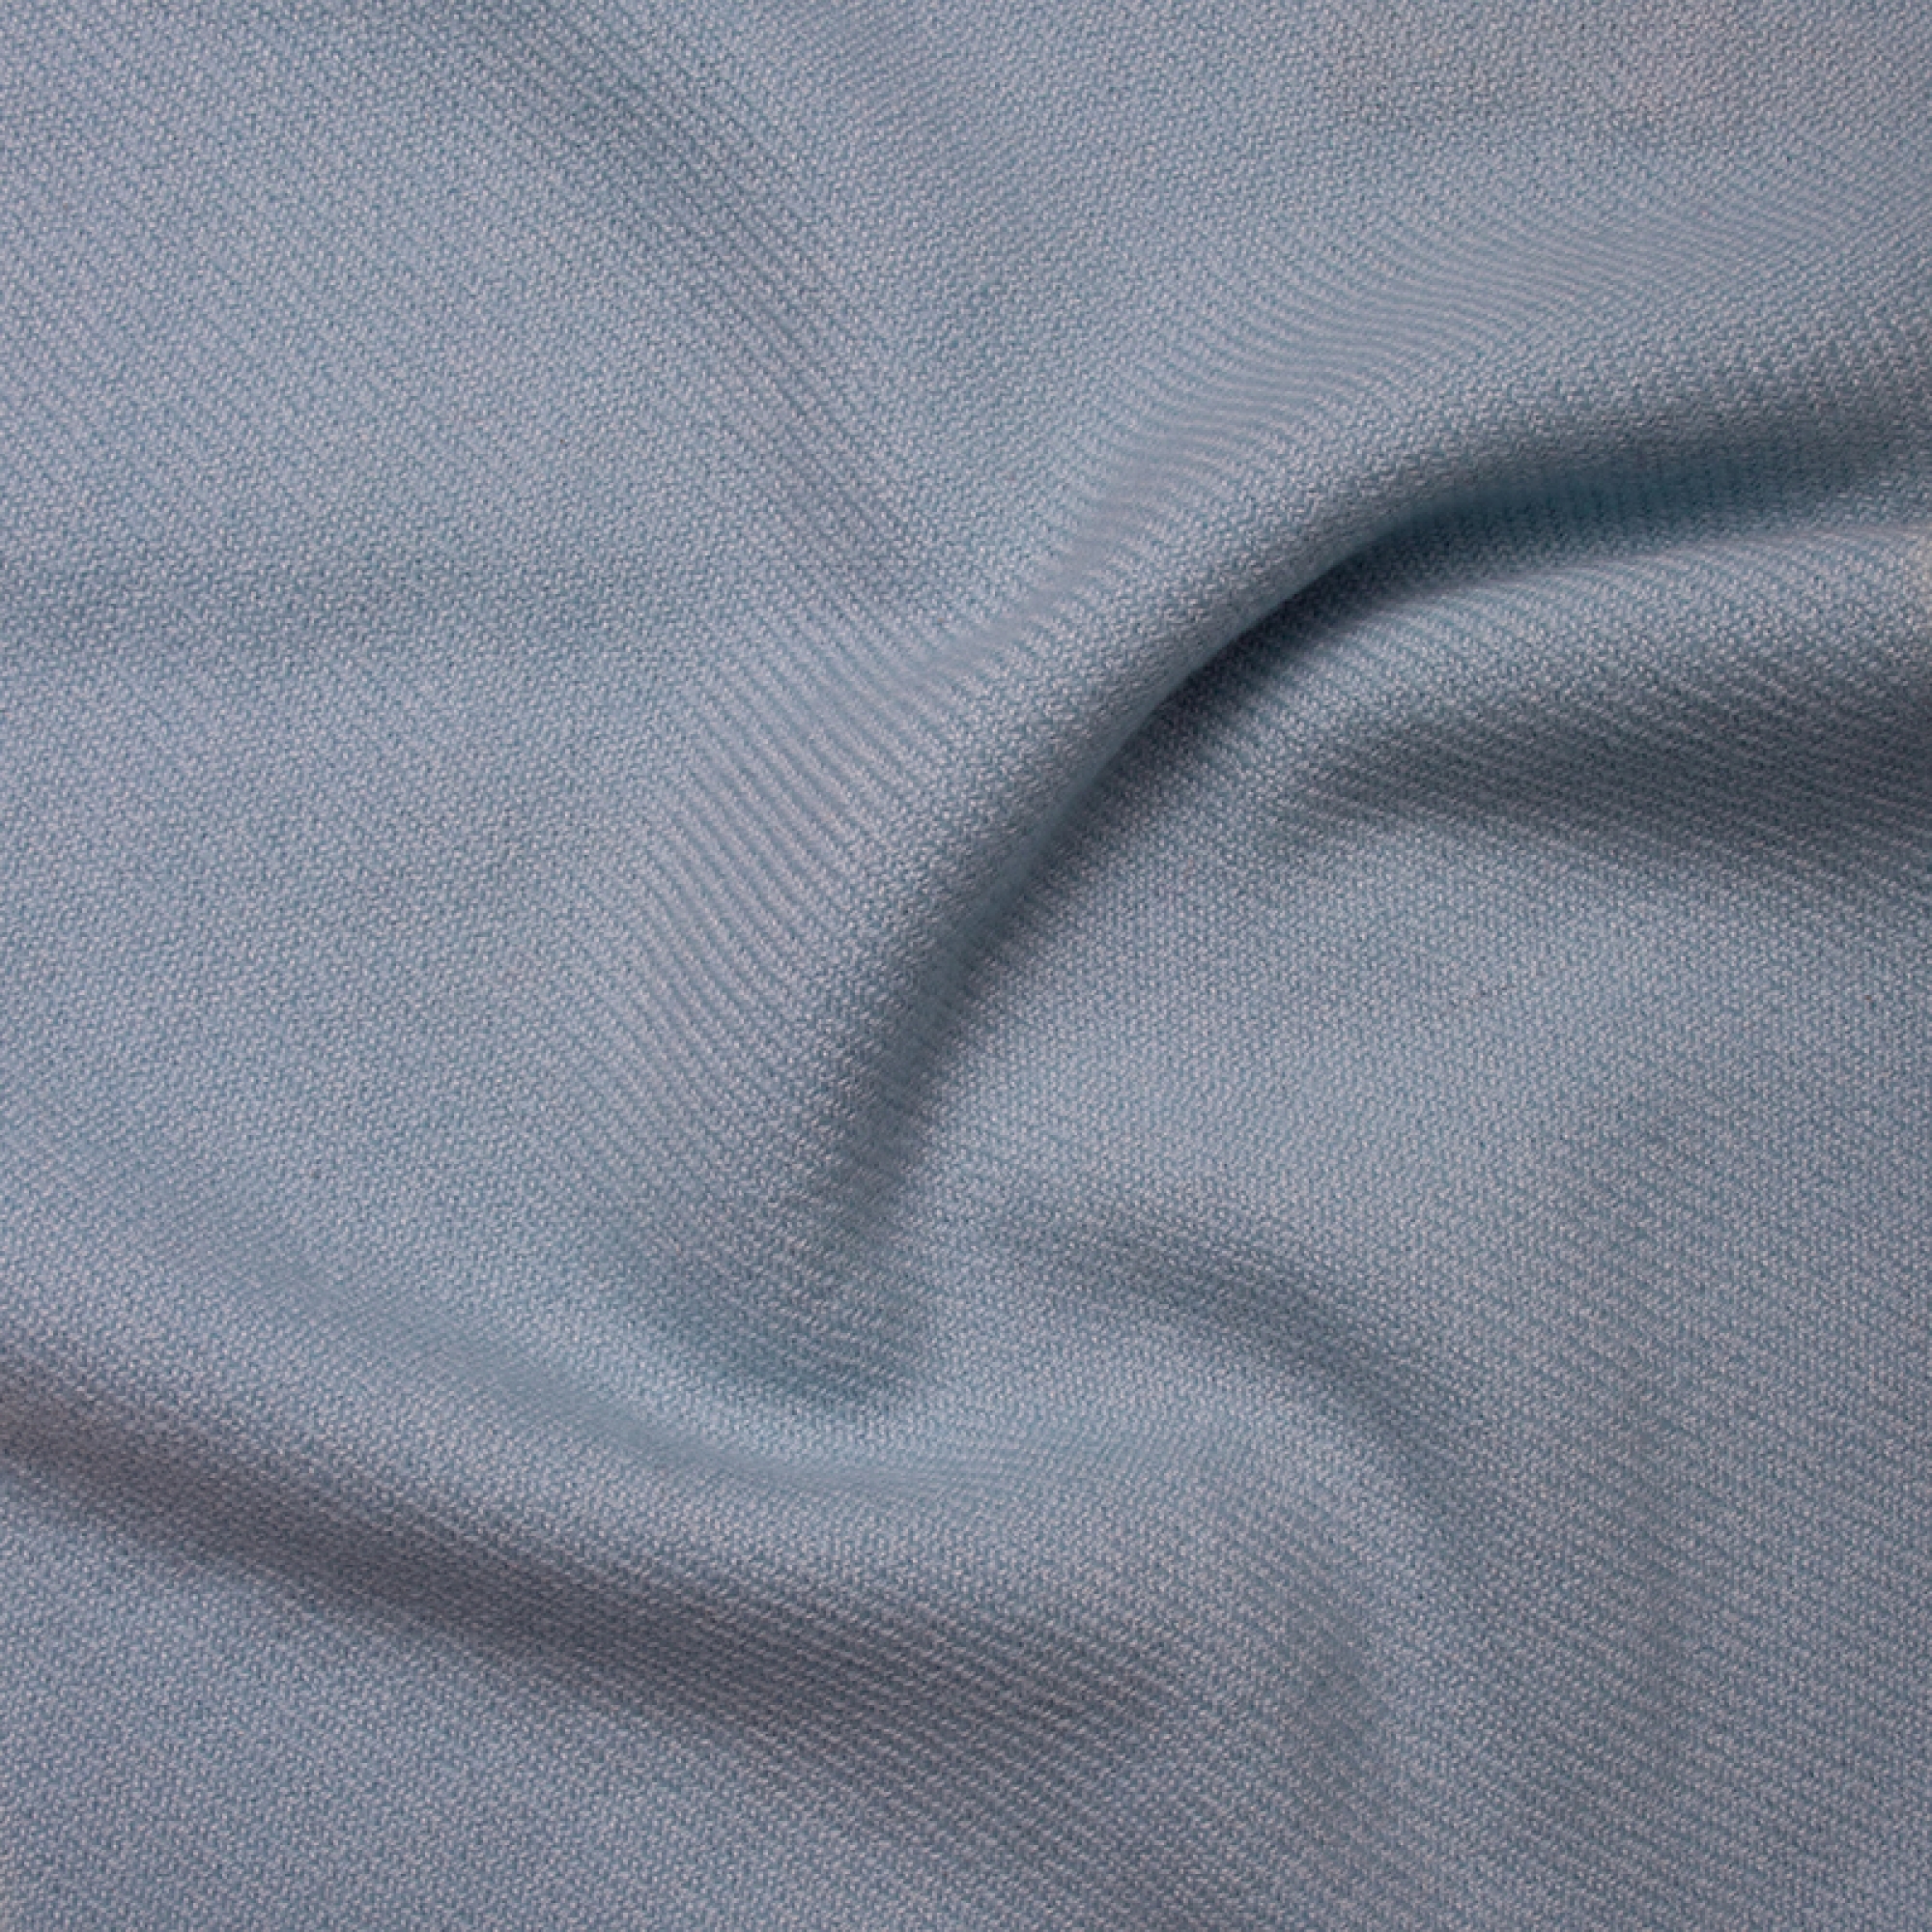 Cashmere accessories blanket toodoo plain xl 240 x 260 blue sky 240 x 260 cm